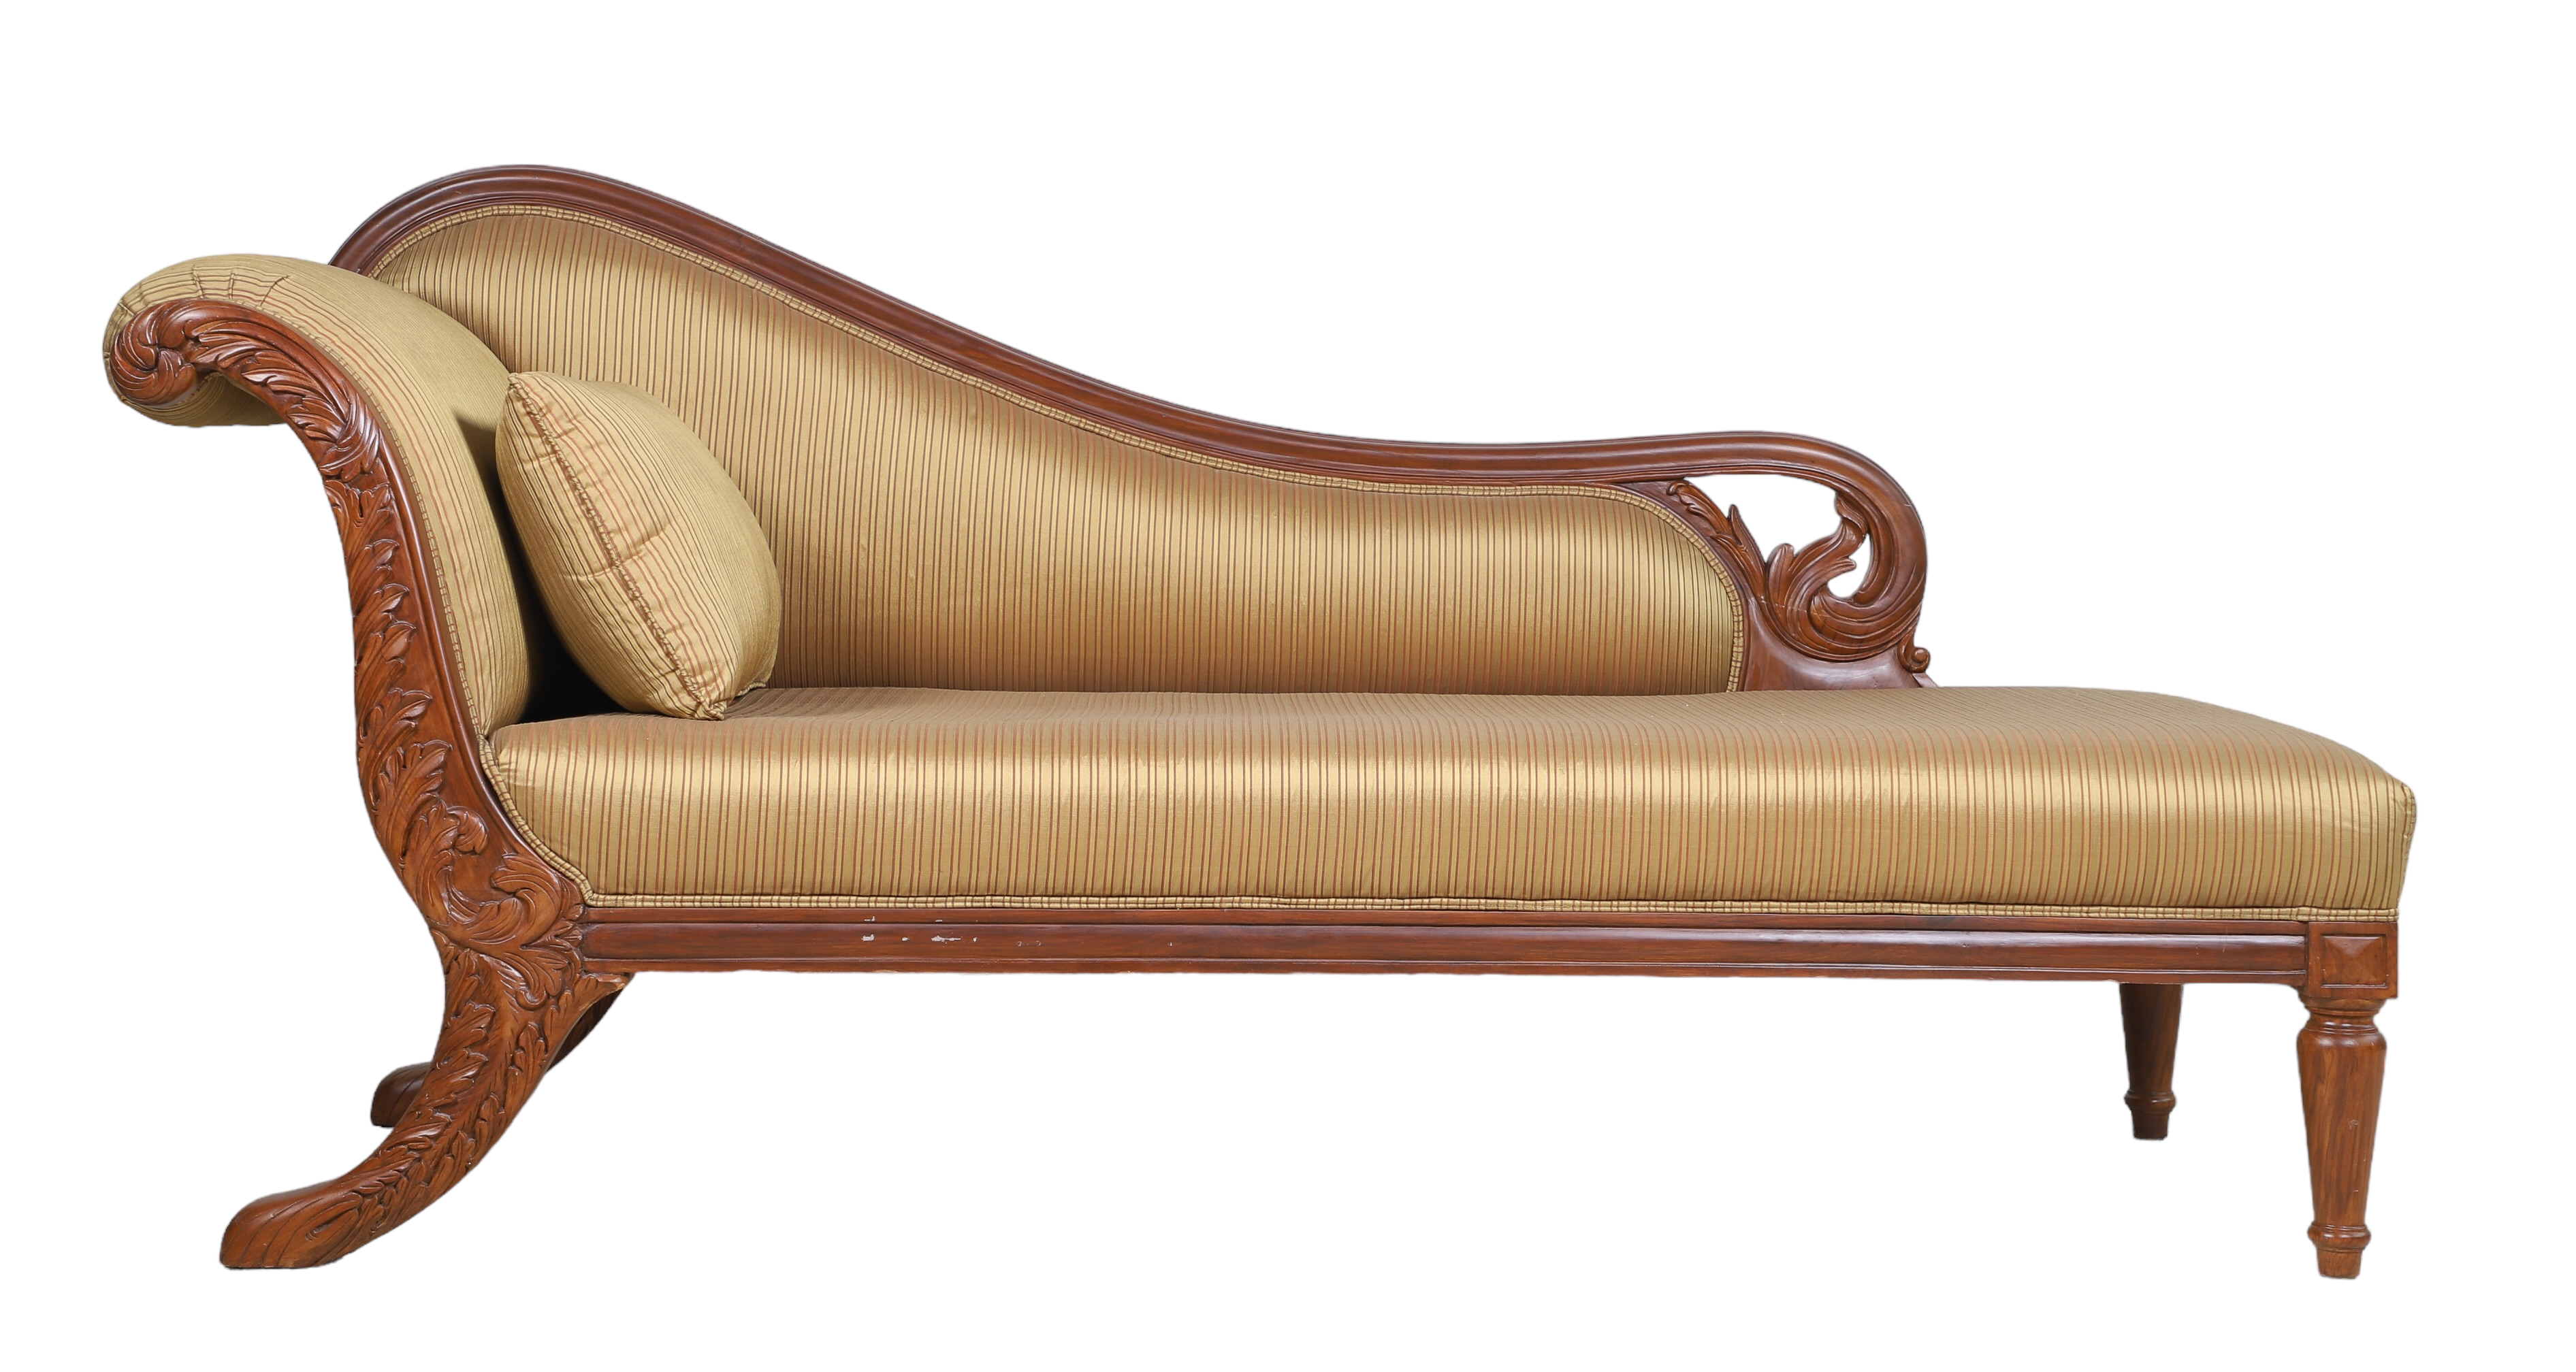 Regency style carved mahogany upholstered